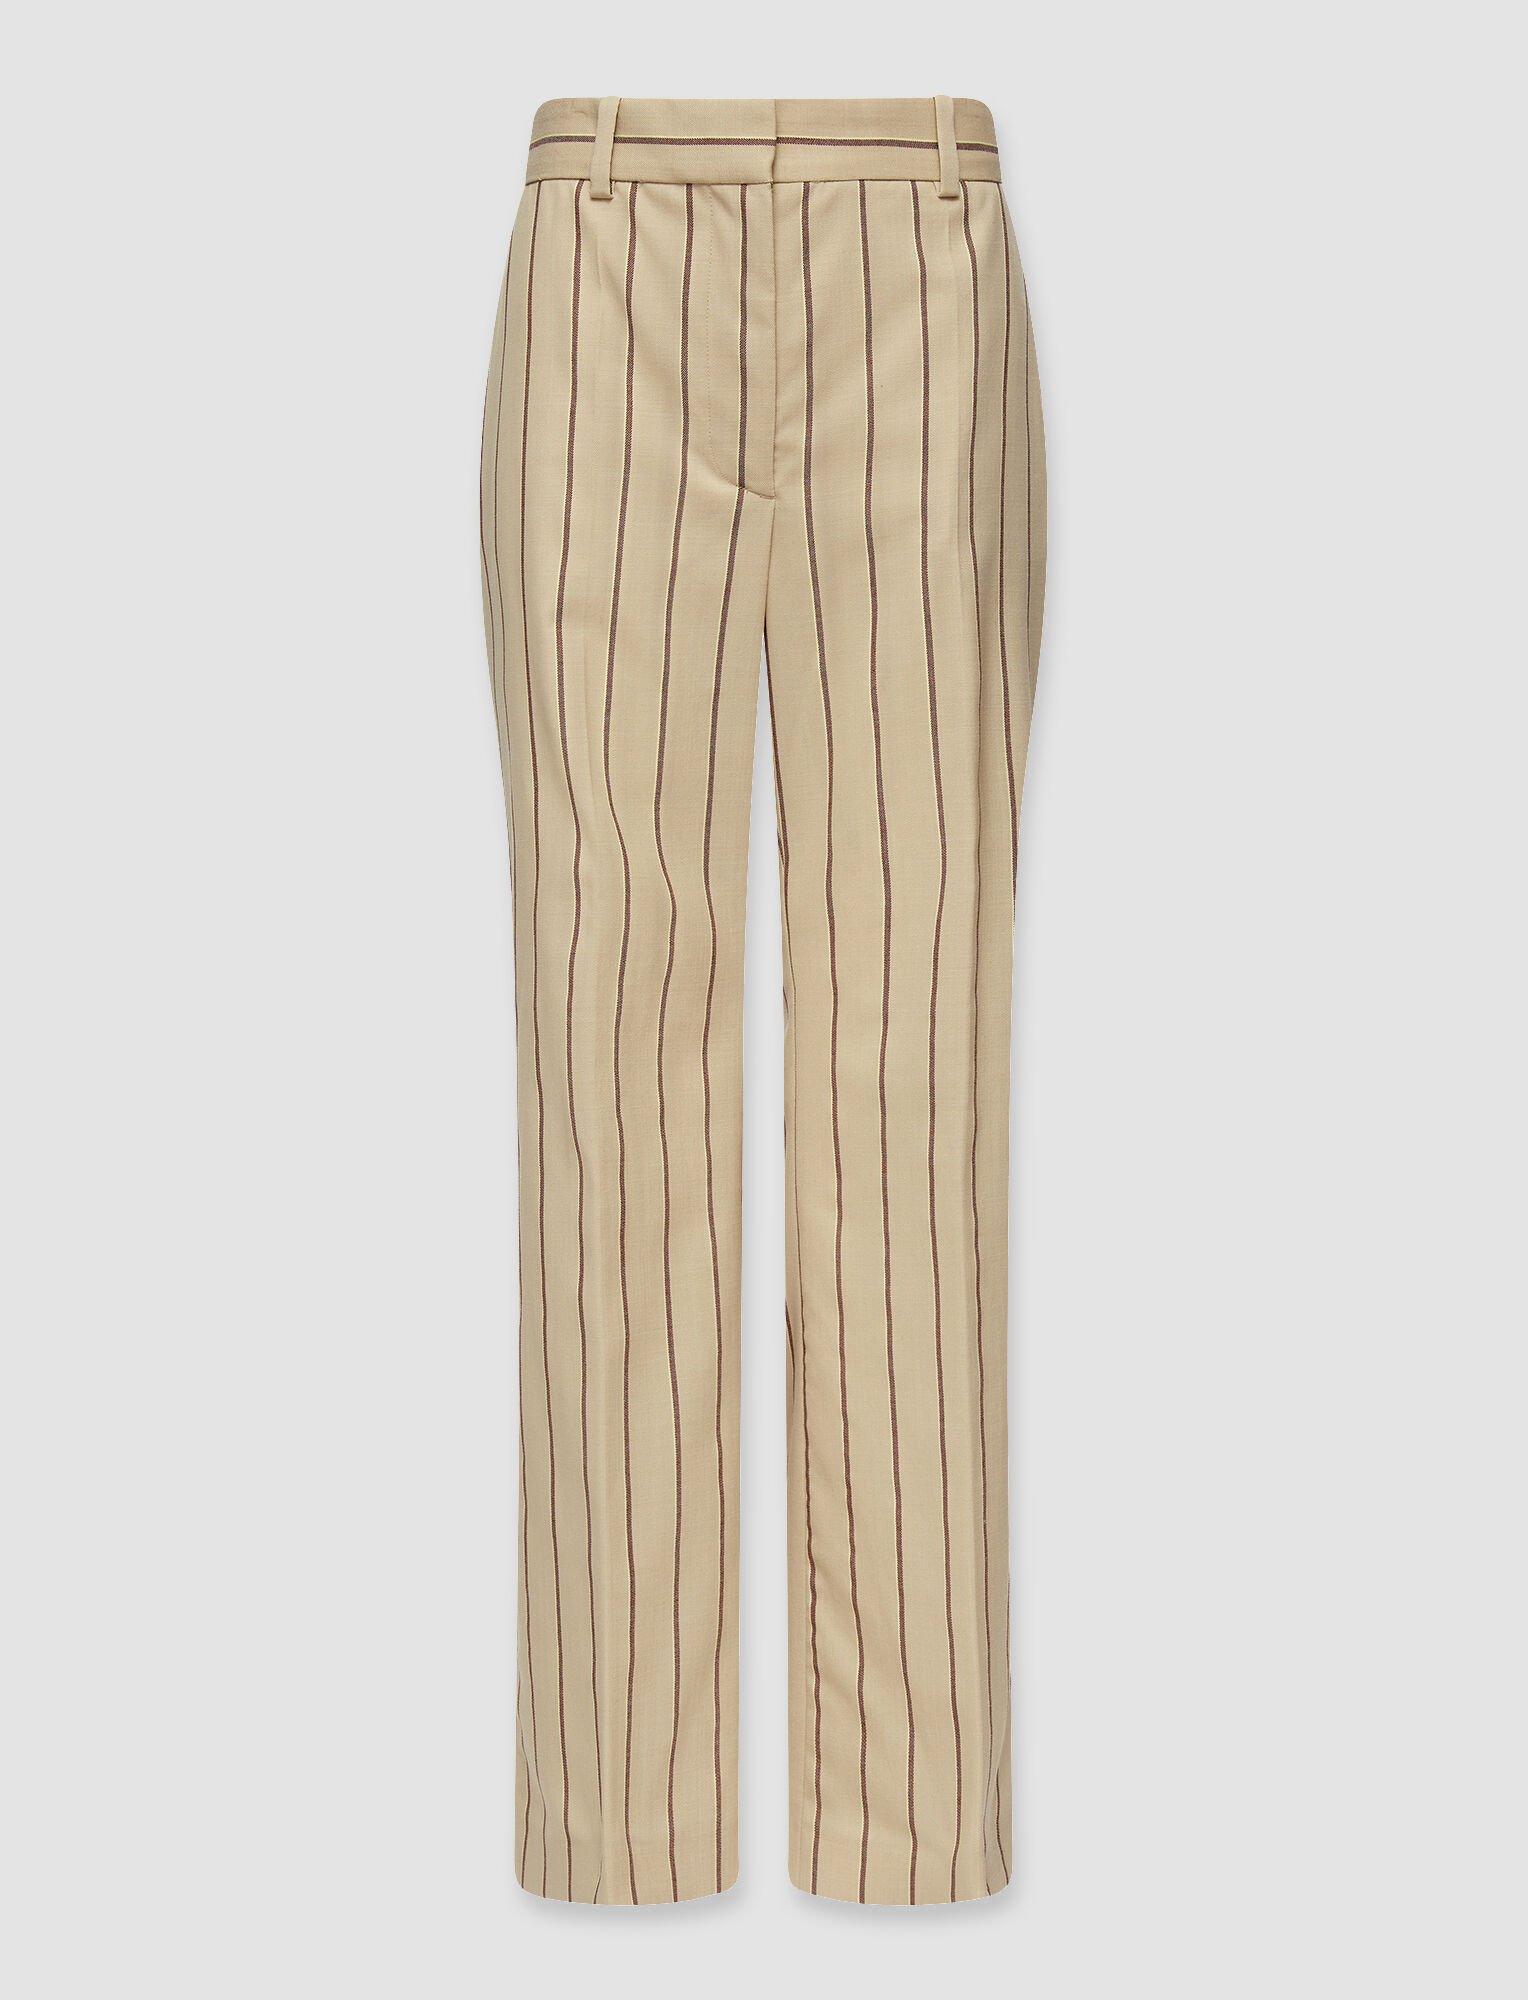 Joseph, Spring Wool Stripe Talia Trousers, in Chai/Sulphur